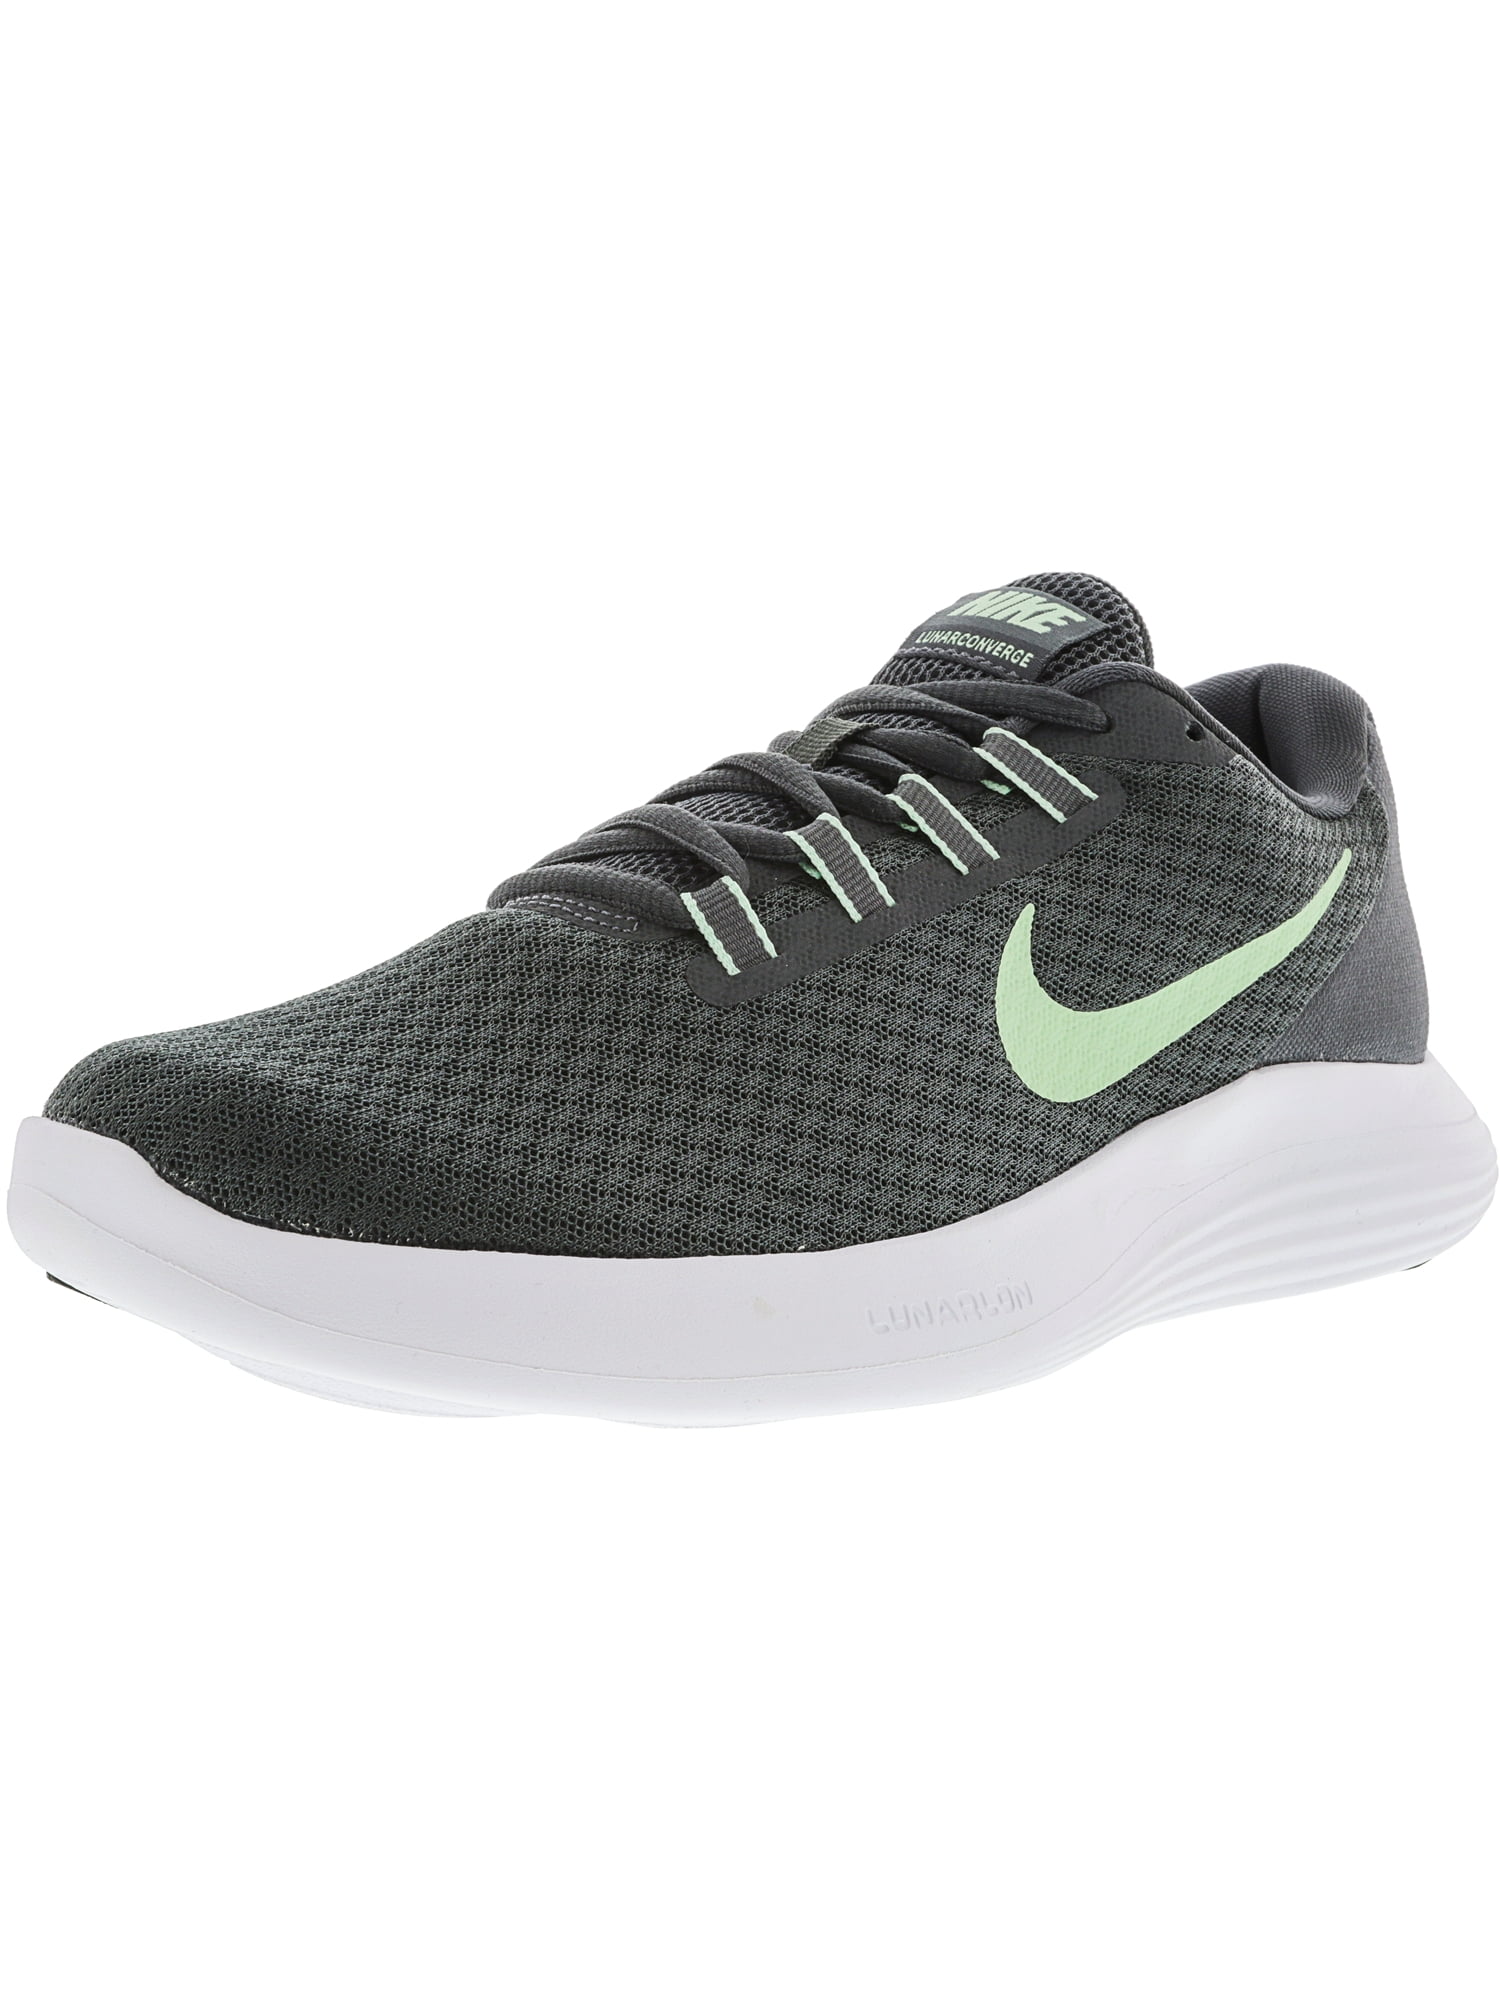 Nike - Women's Lunarconverge Dark Grey / Fresh Mint-Cool Ankle-High ...